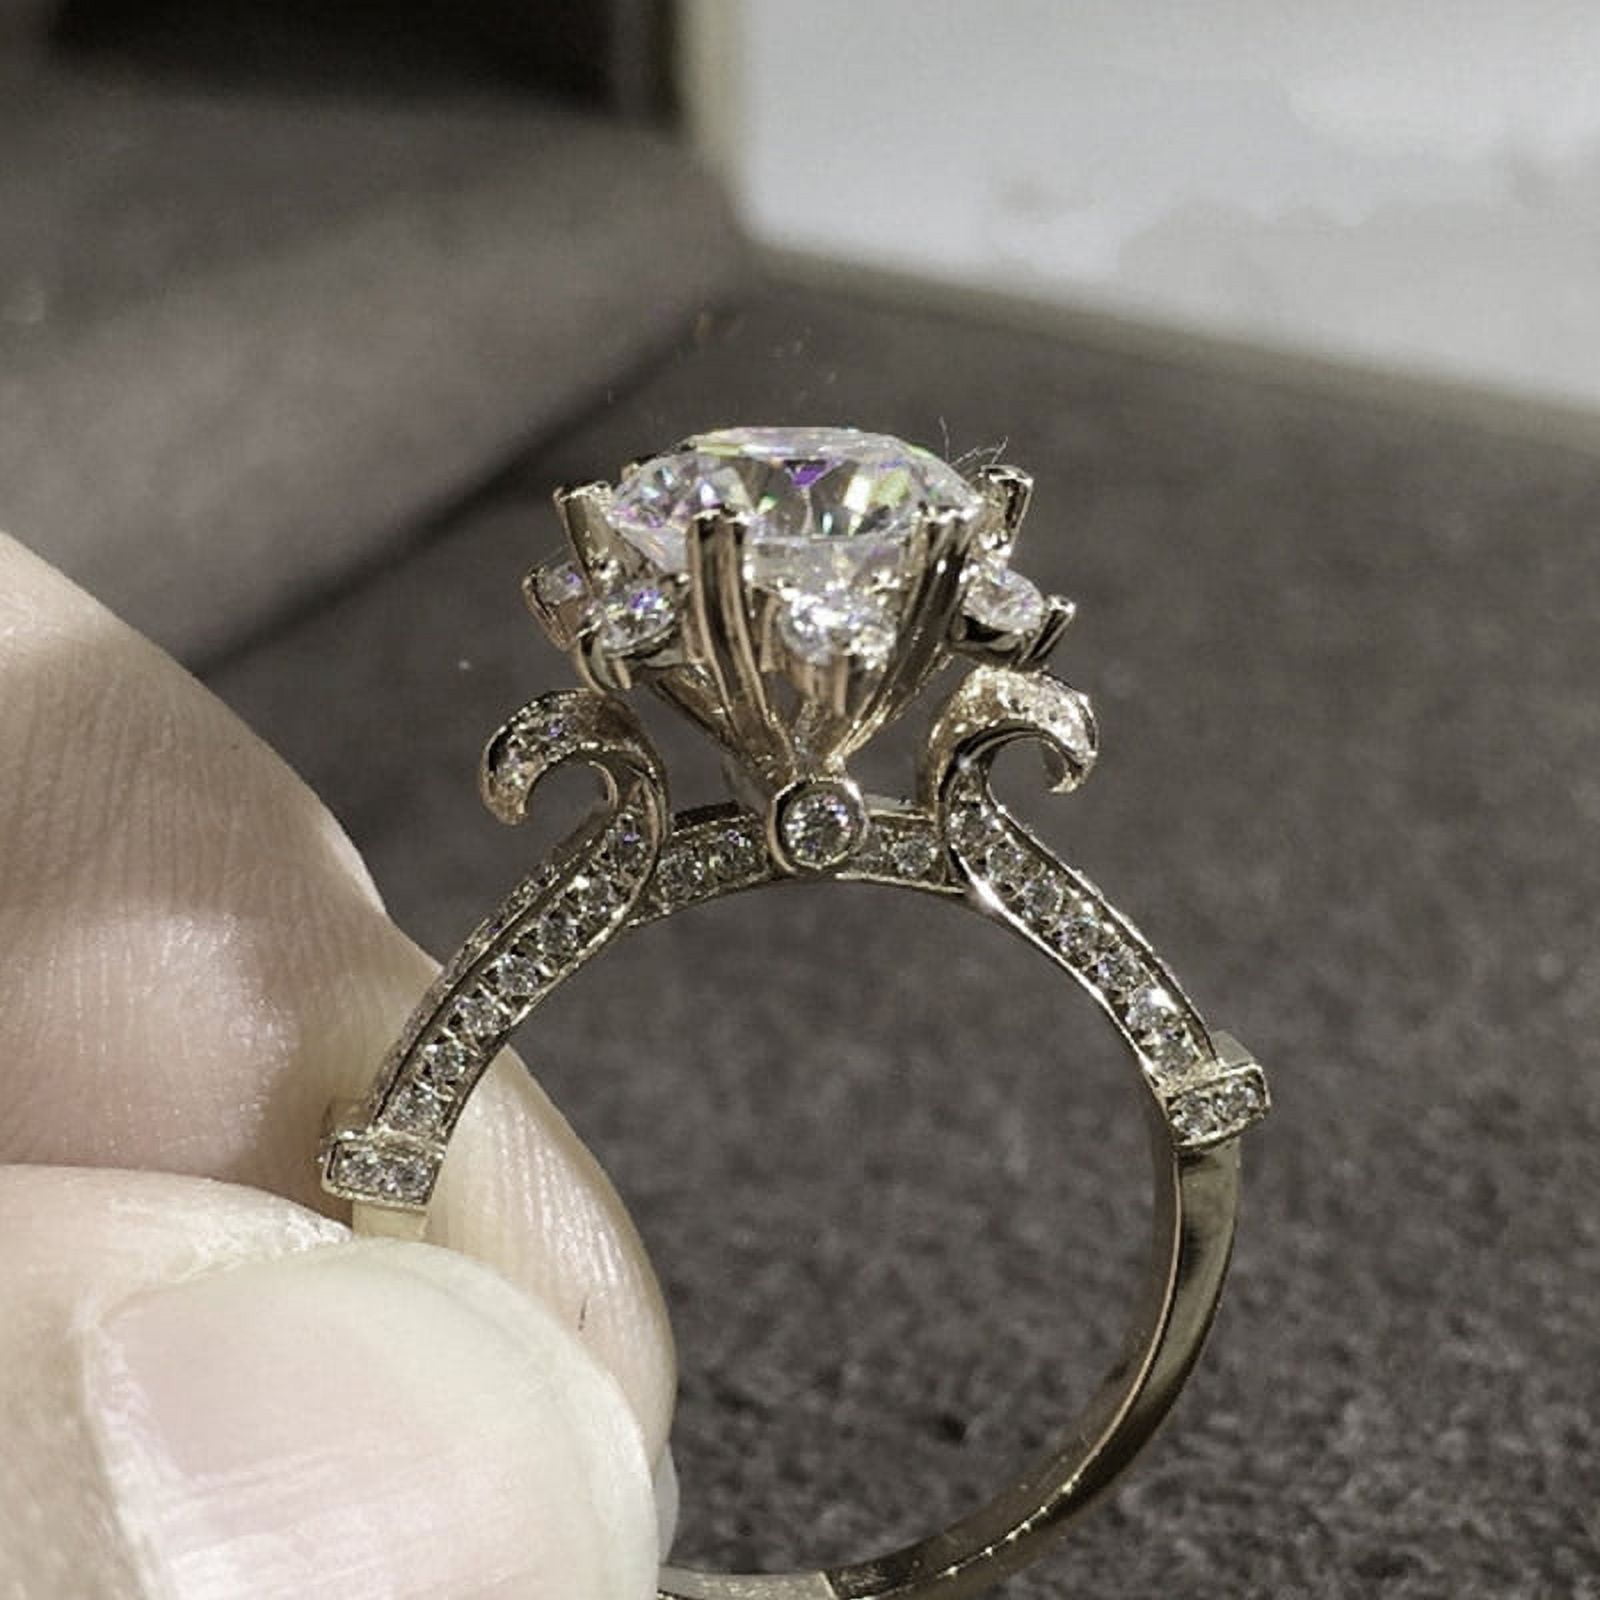 Custom Organic Flower Halo Diamond And Blue Topaz Engagement Ring #101946 -  Seattle Bellevue | Joseph Jewelry